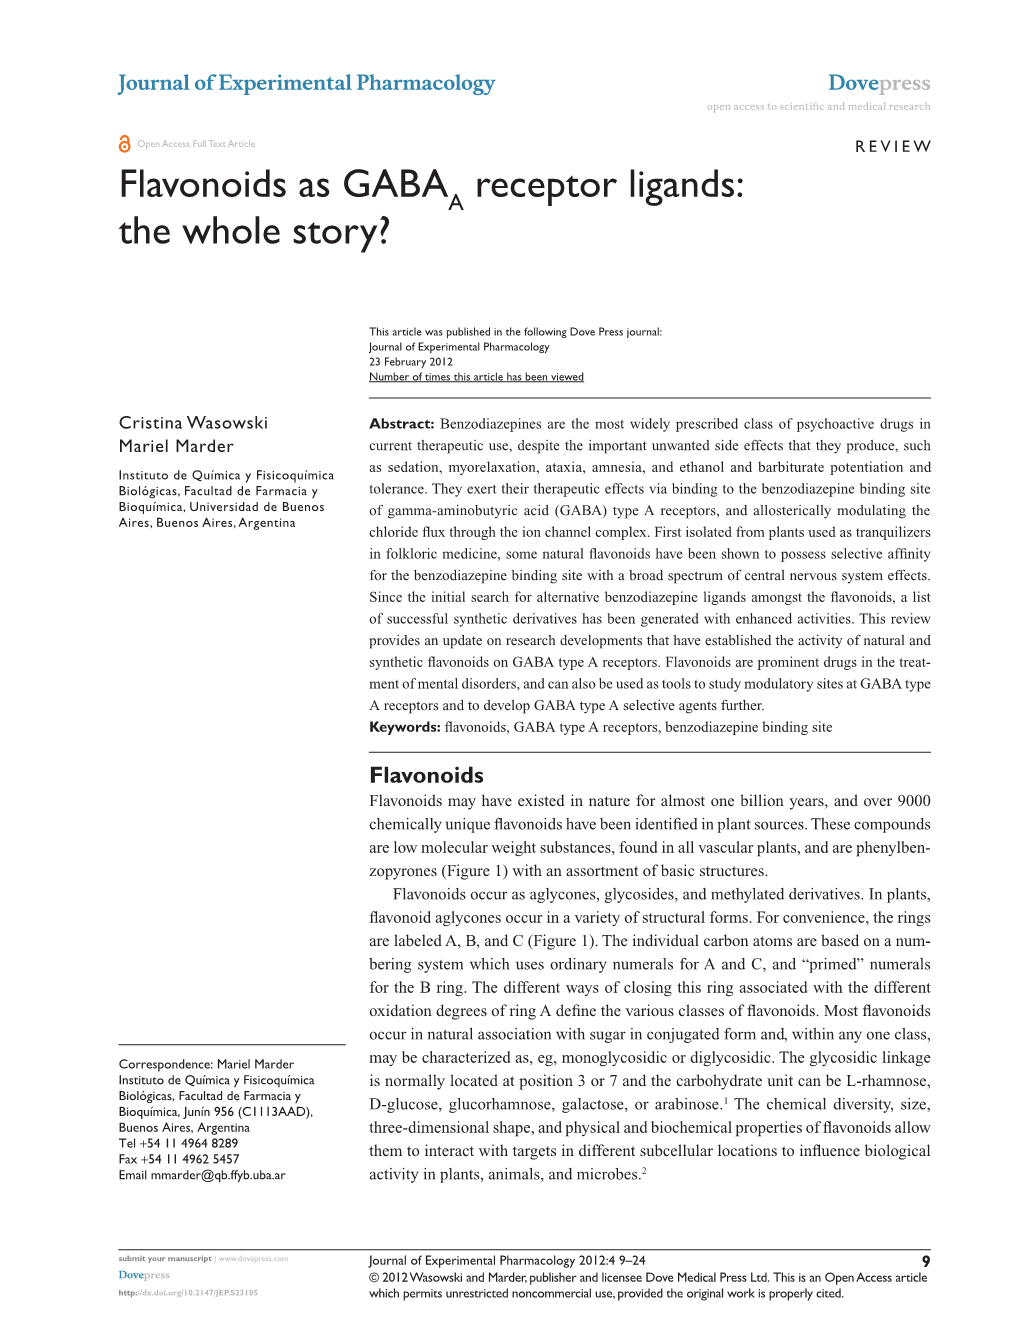 Flavonoids As GABA Receptor Ligands